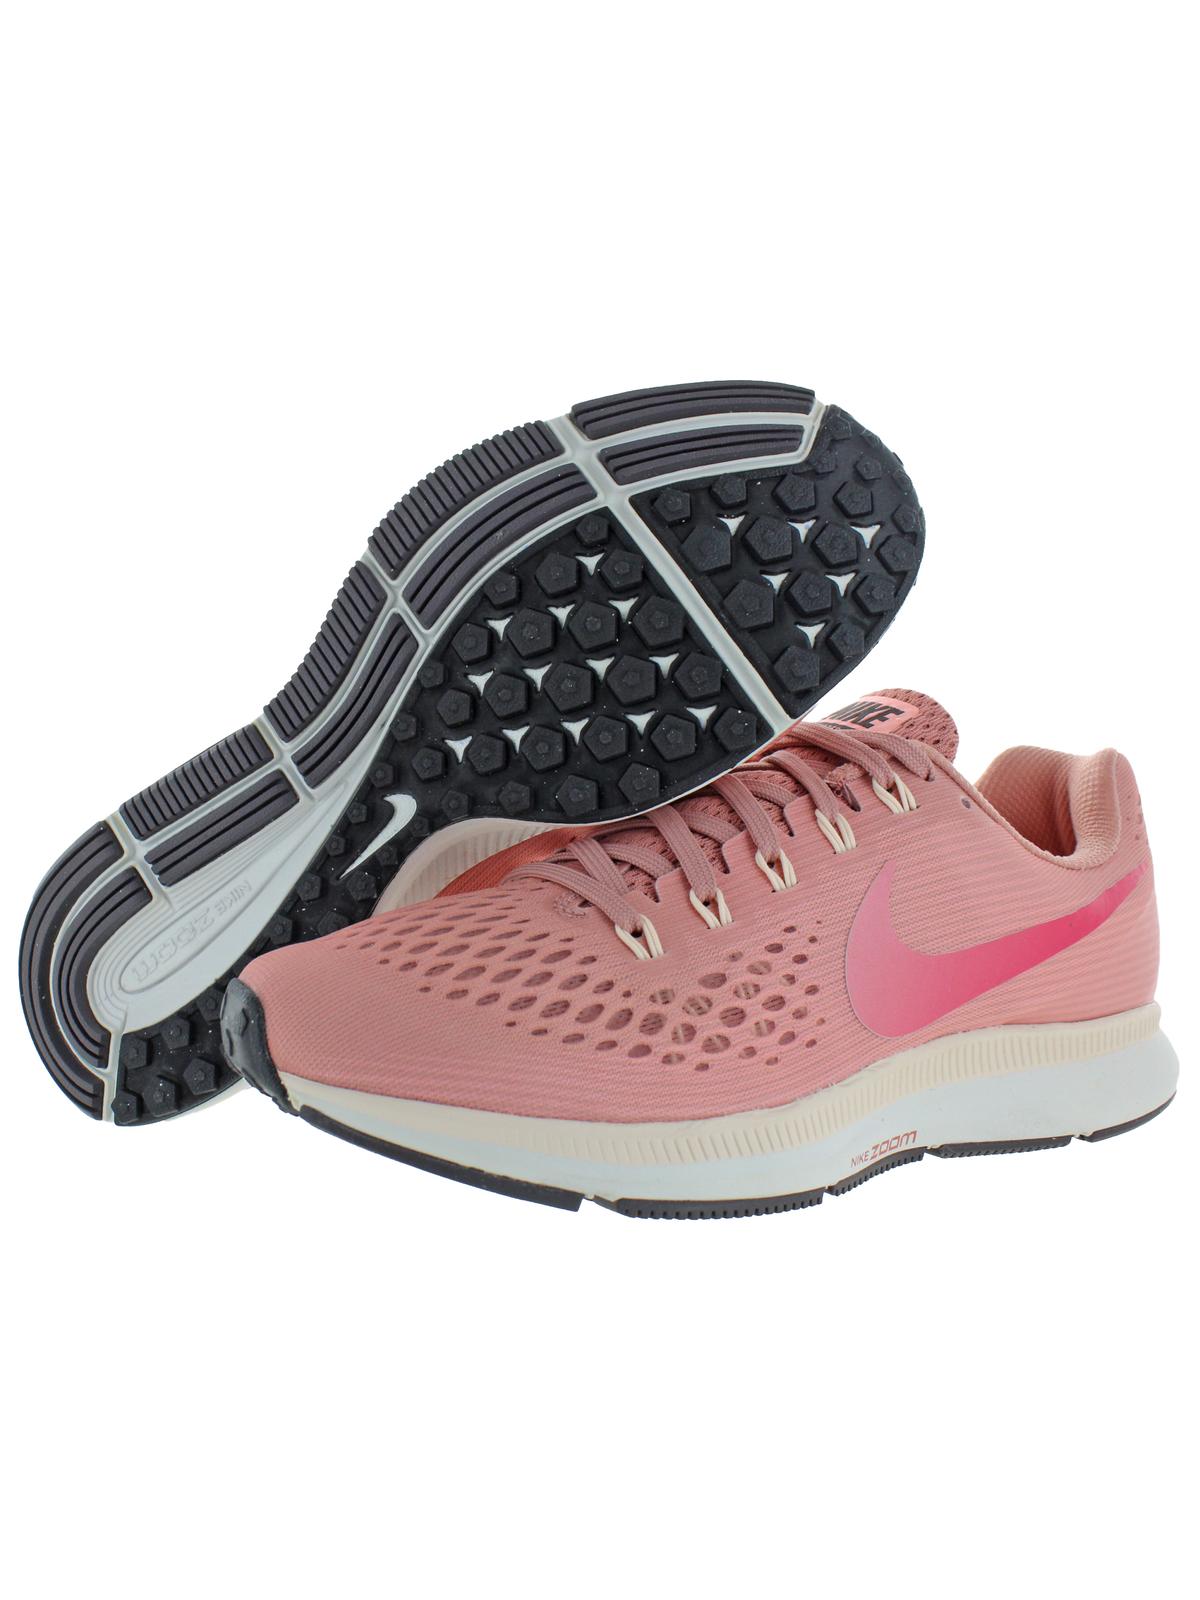 Nike Womens Air Zoom Pegasus 34 Mesh Low Top Running Shoes - image 2 of 2